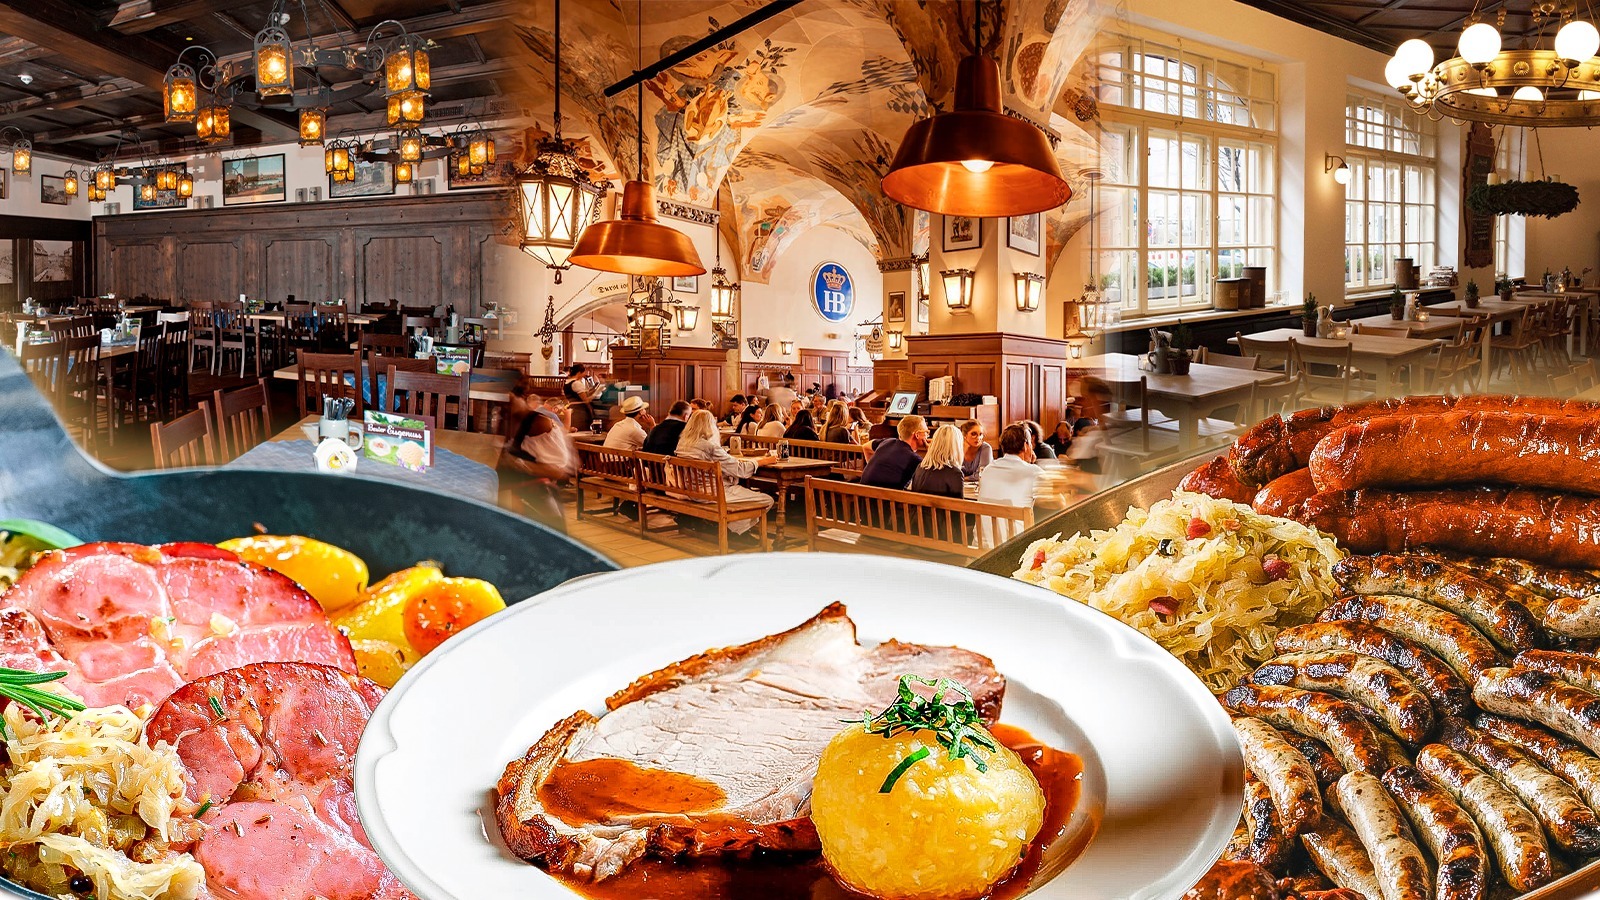 18 Best Restaurants In Munich For Traditional German Food